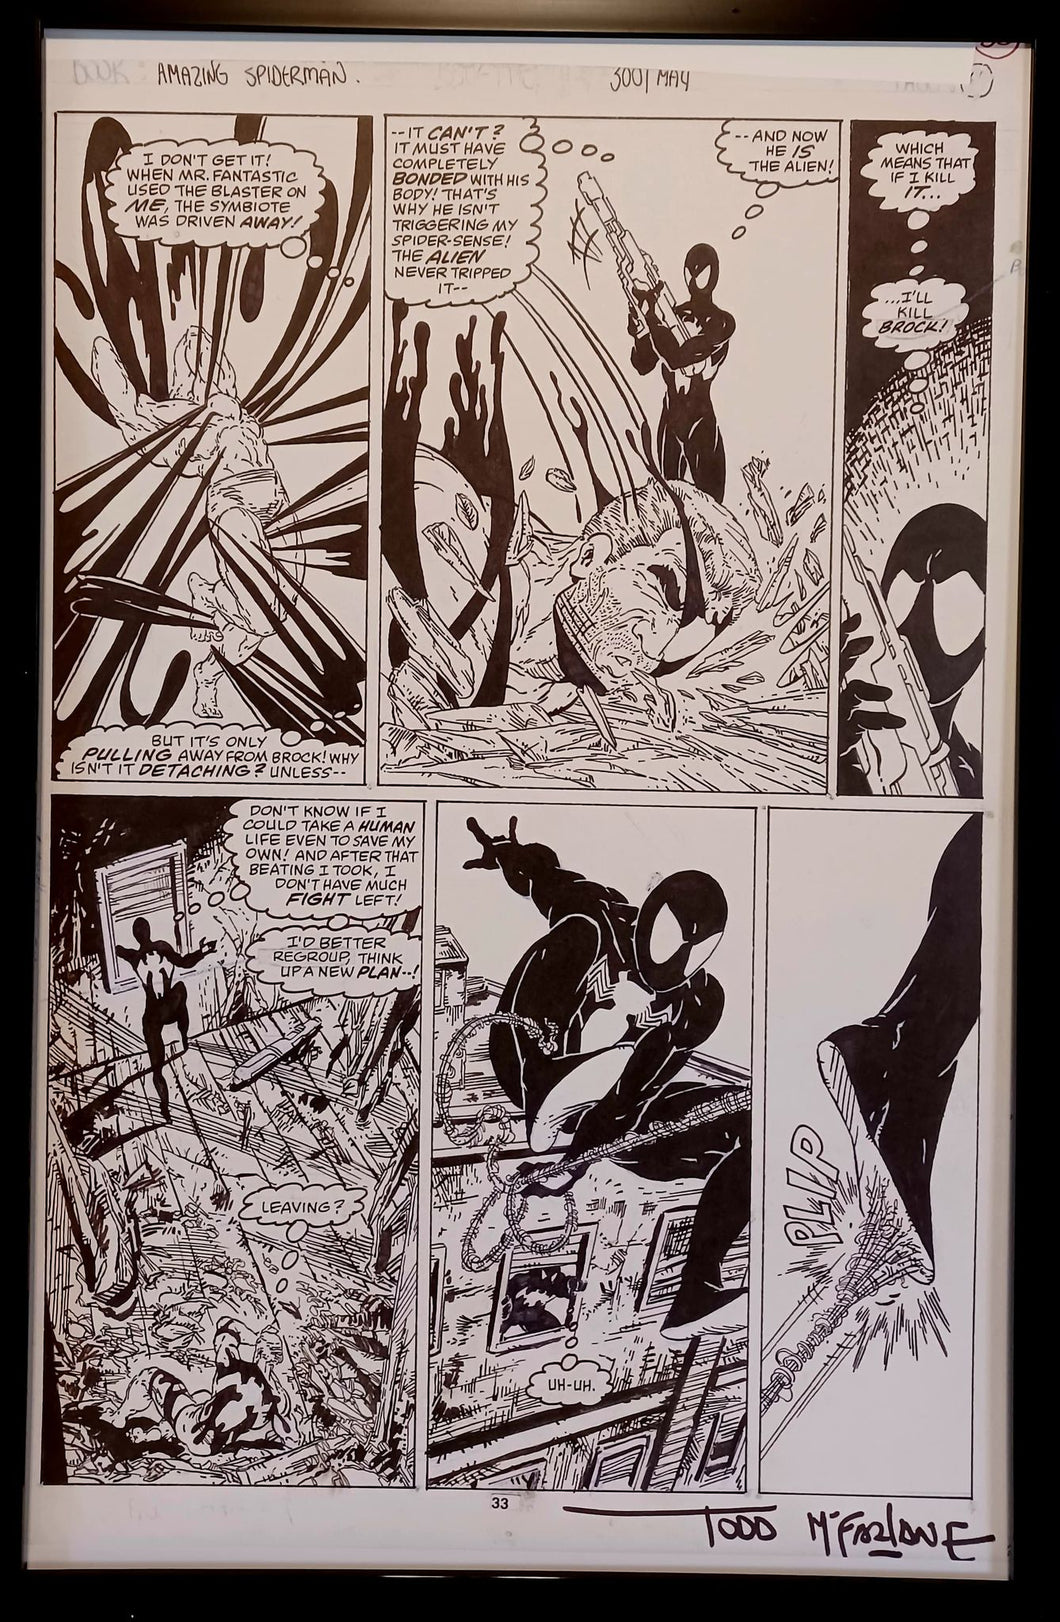 Amazing Spider-Man #300 pg. 29 by Todd McFarlane 11x17 FRAMED Original Art Print Comic Poster